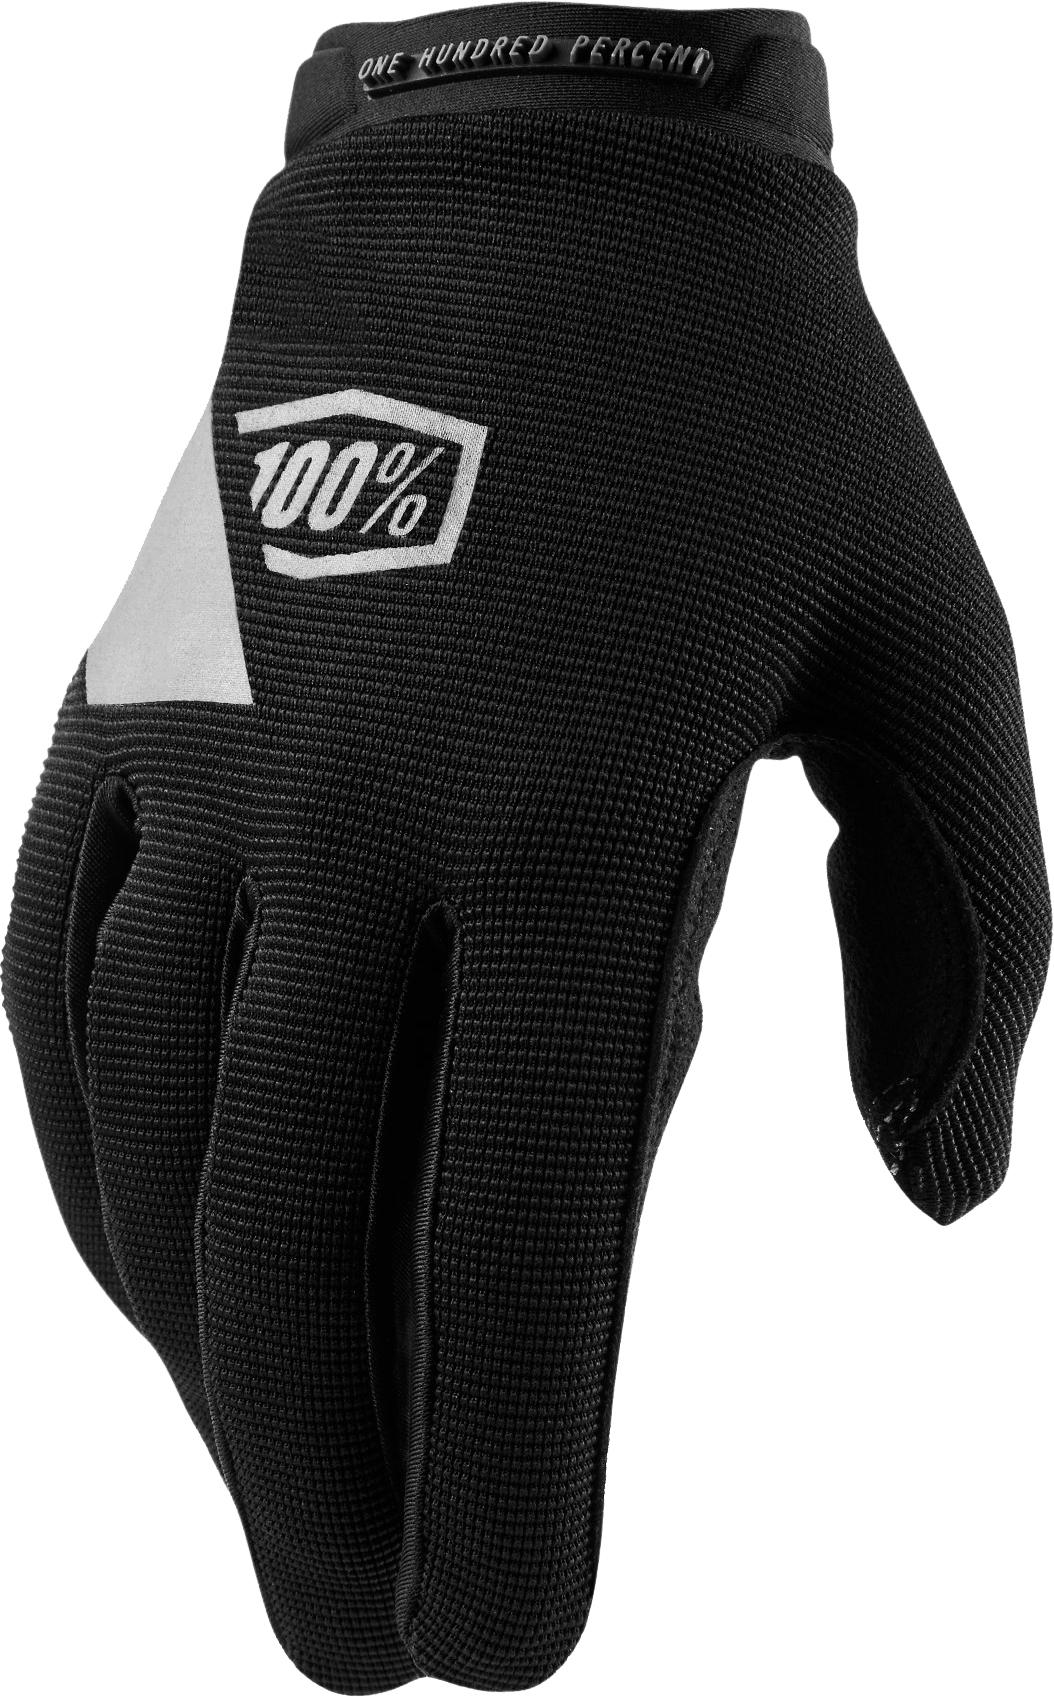 100% Ridecamp Gloves - Black - Xl  Black